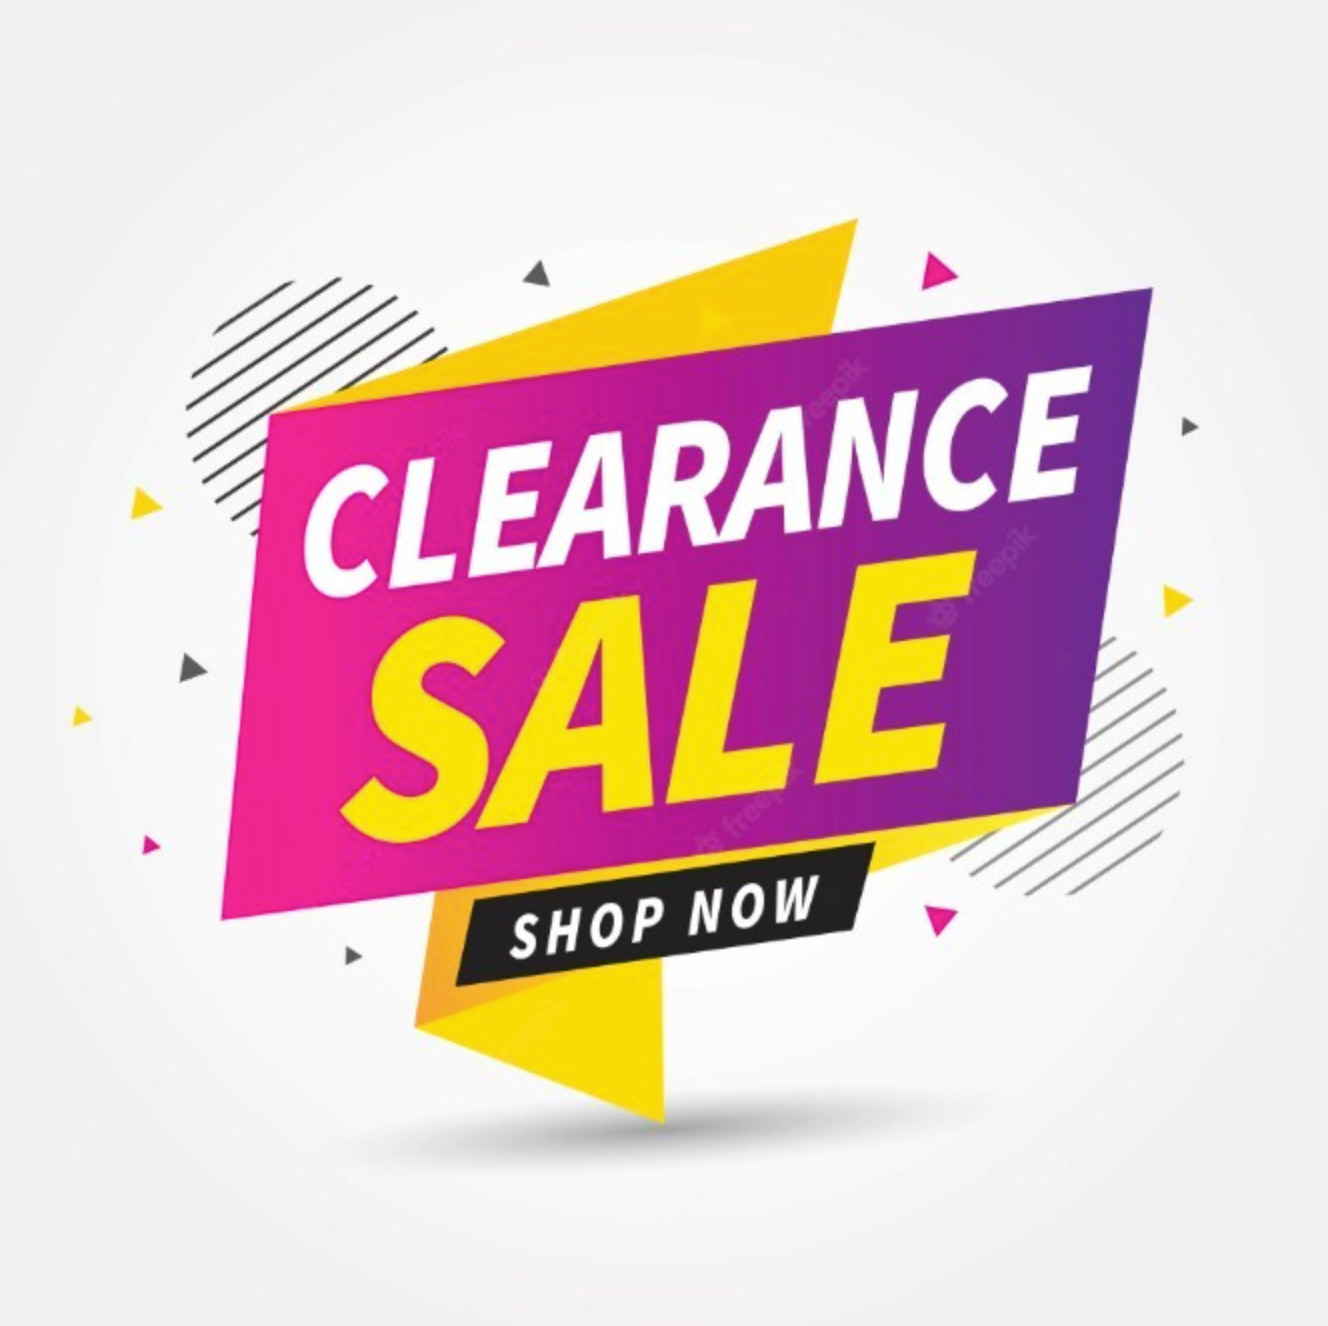 clearance sale items